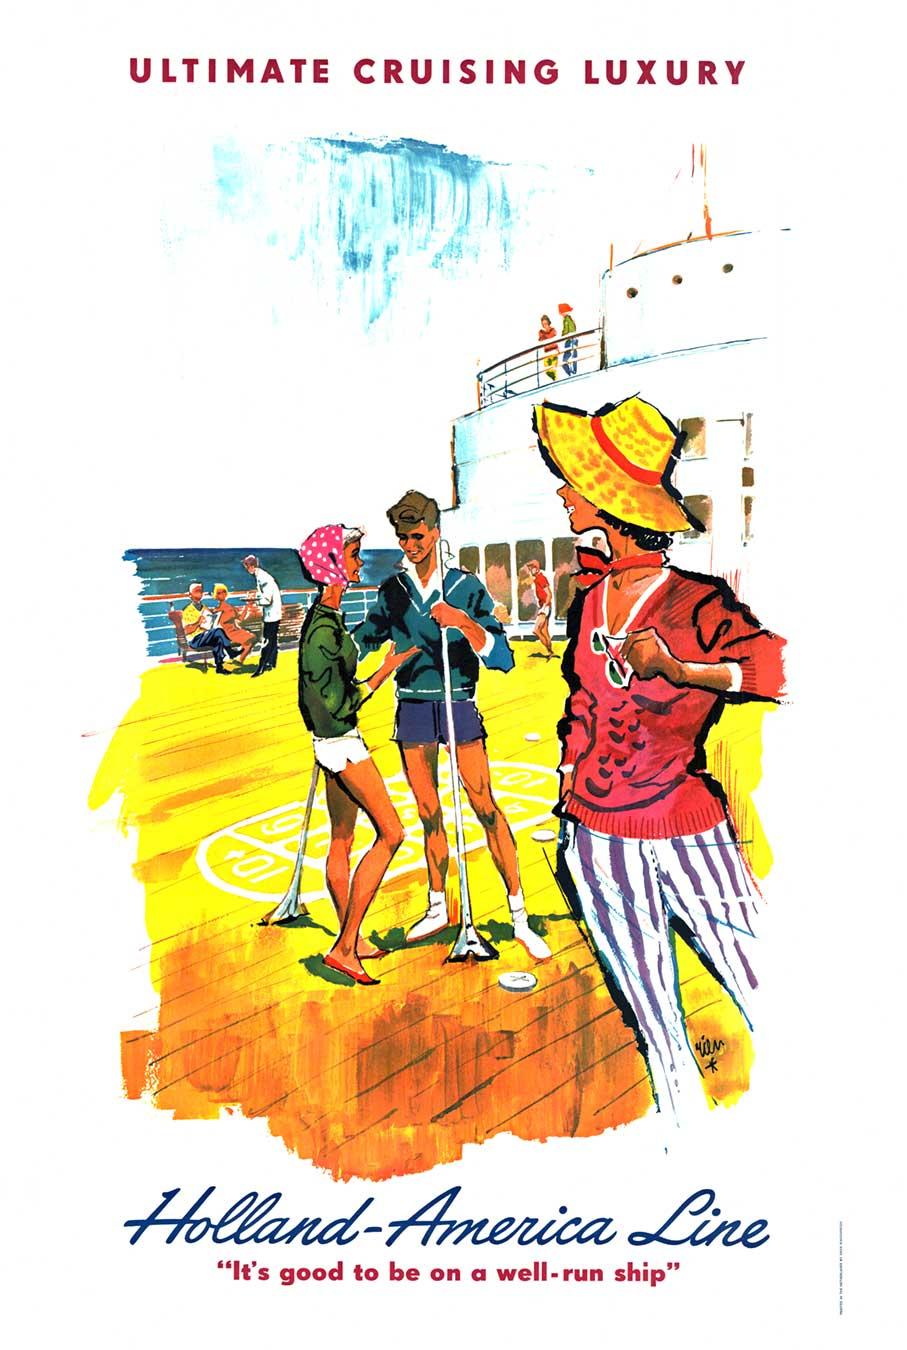 Rien Poortvliet Landscape Print - Original "Holland - America Line" vintage cruise line travel poster